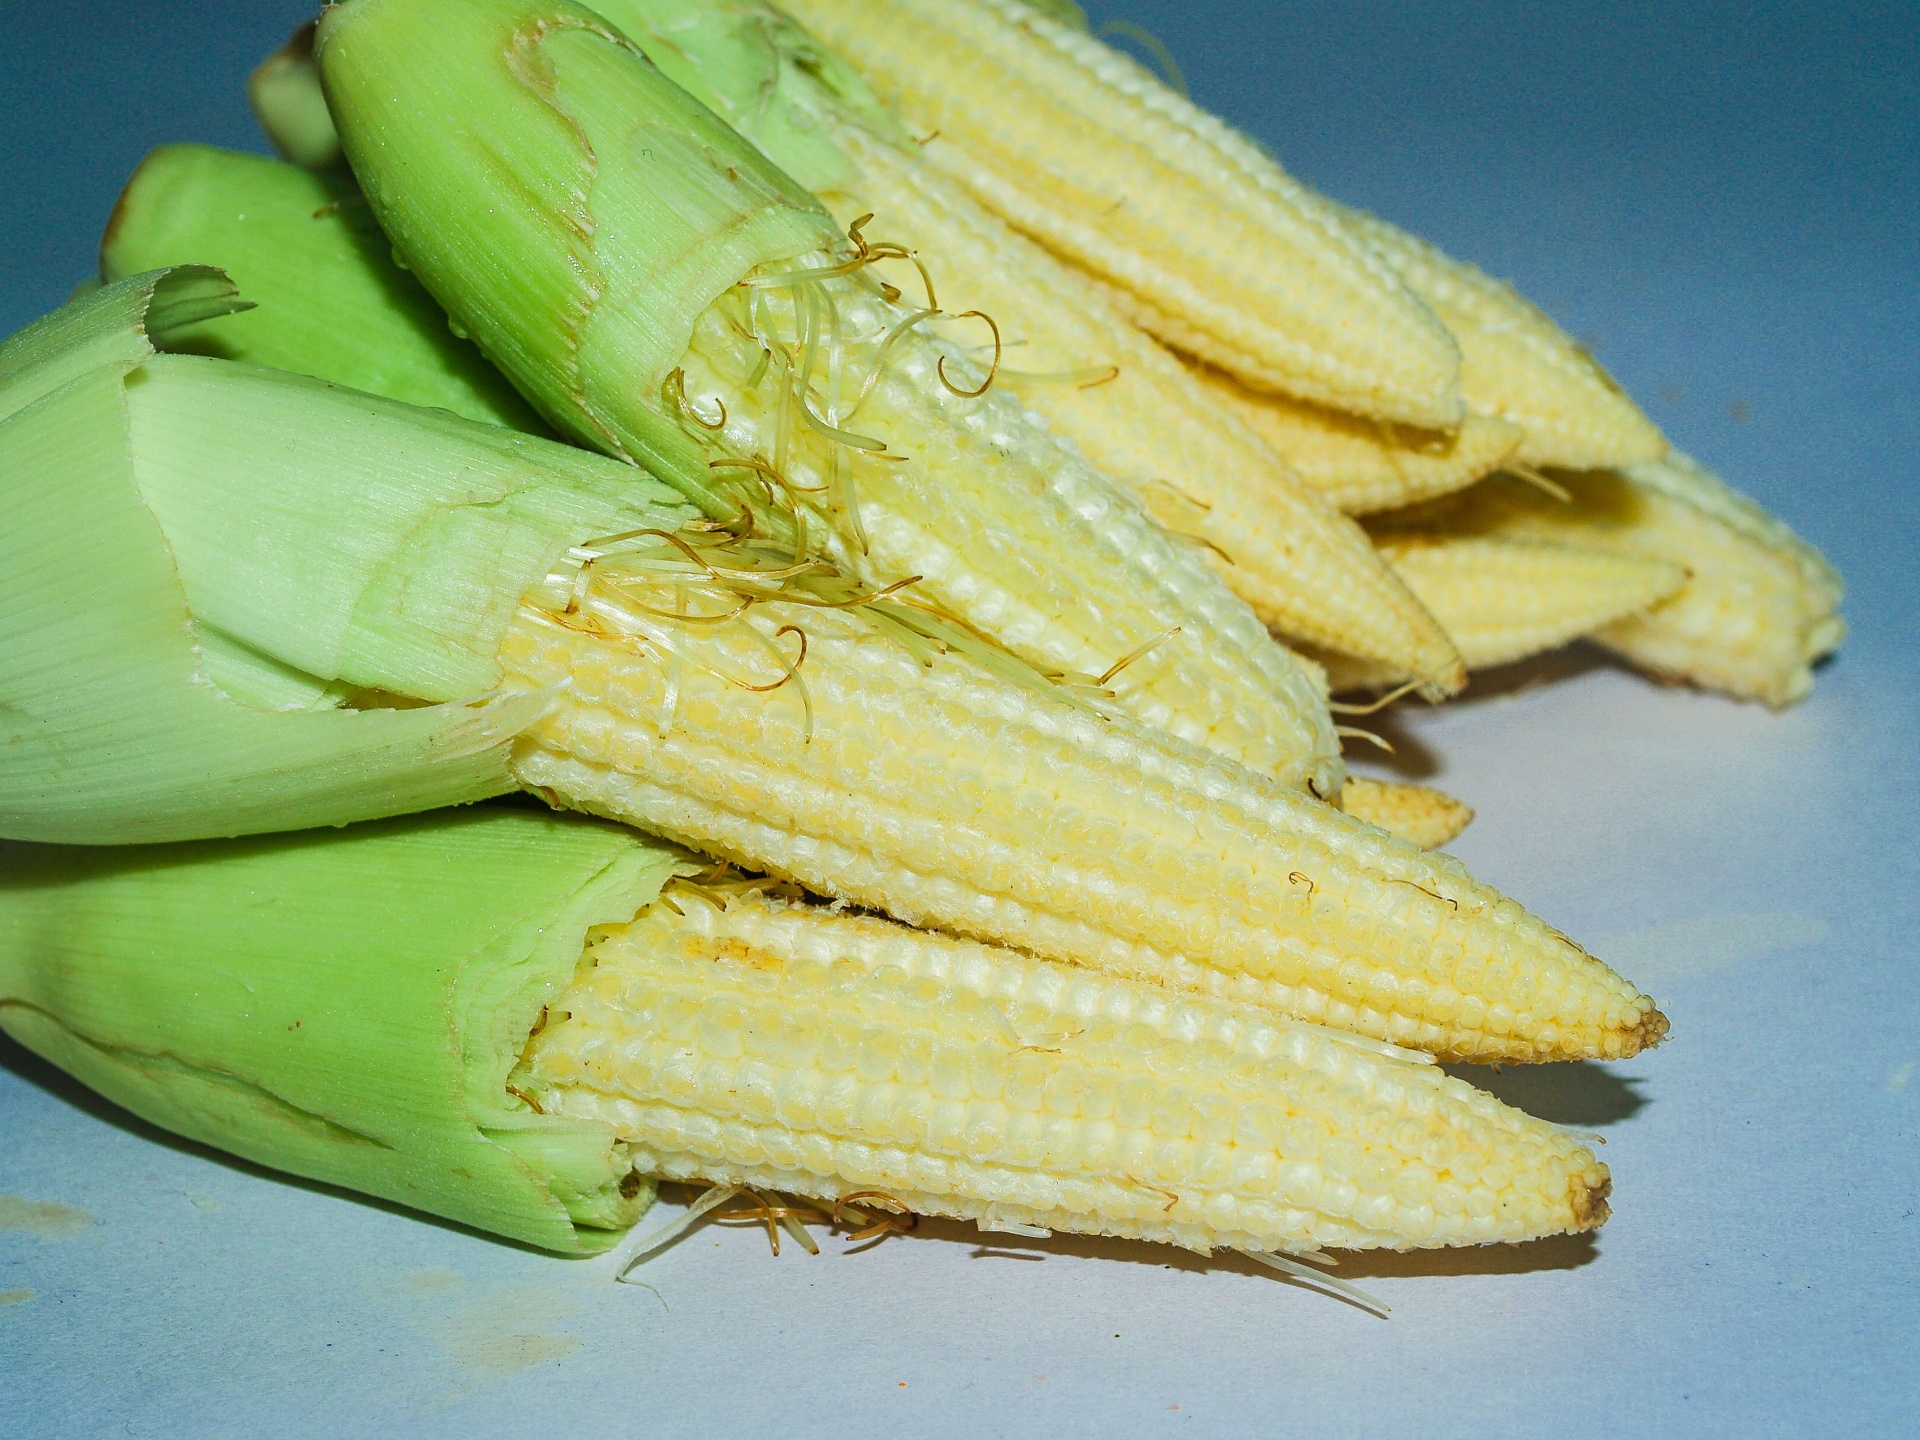 Young Small Corn Closeup